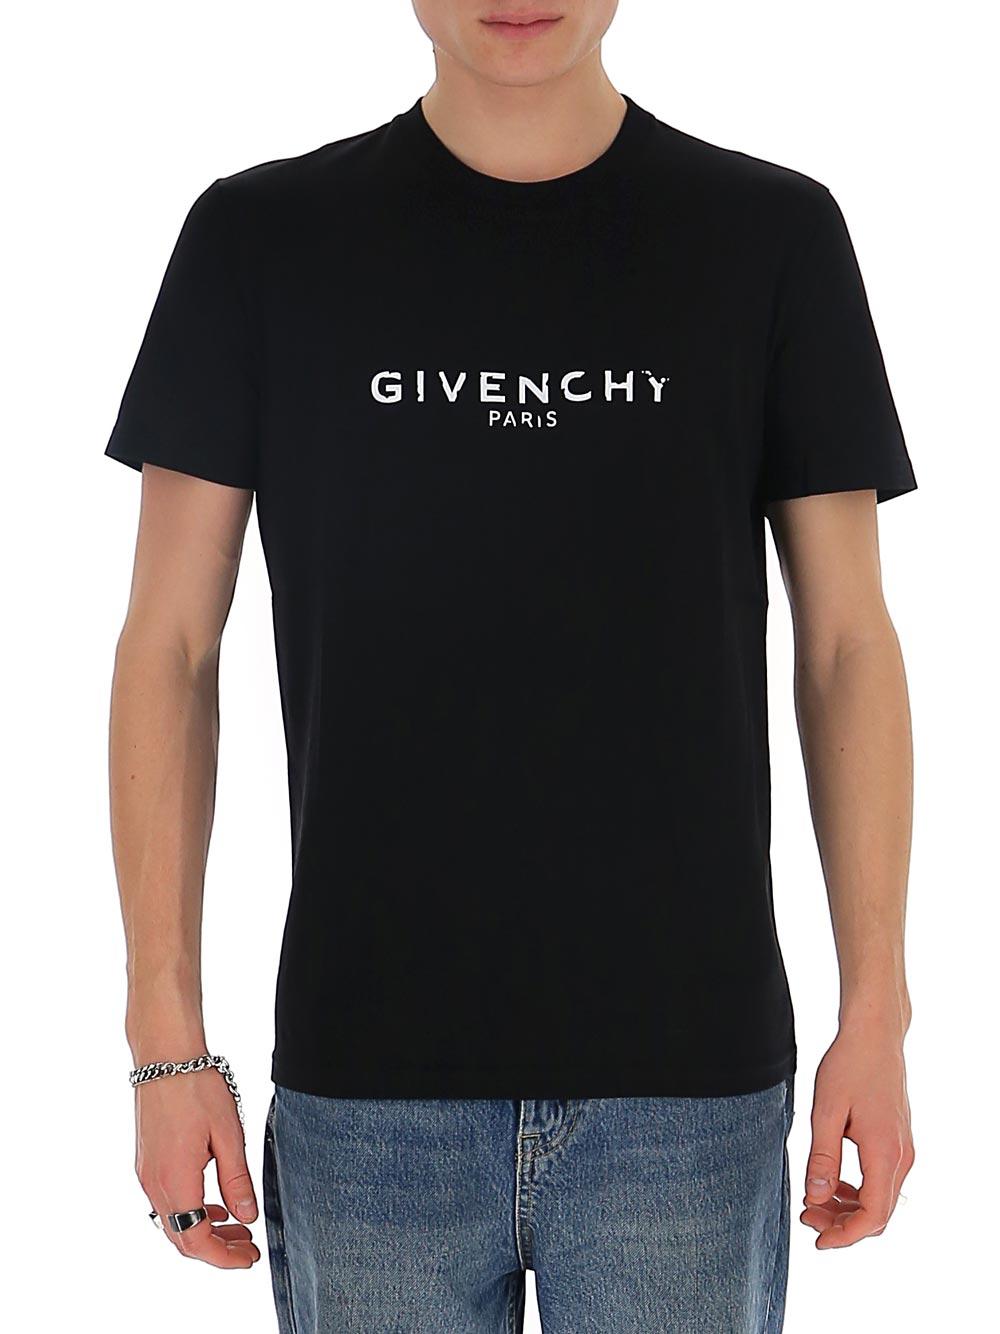 Givenchy Cotton Paris Slim Fit T-shirt in Black for Men - Lyst